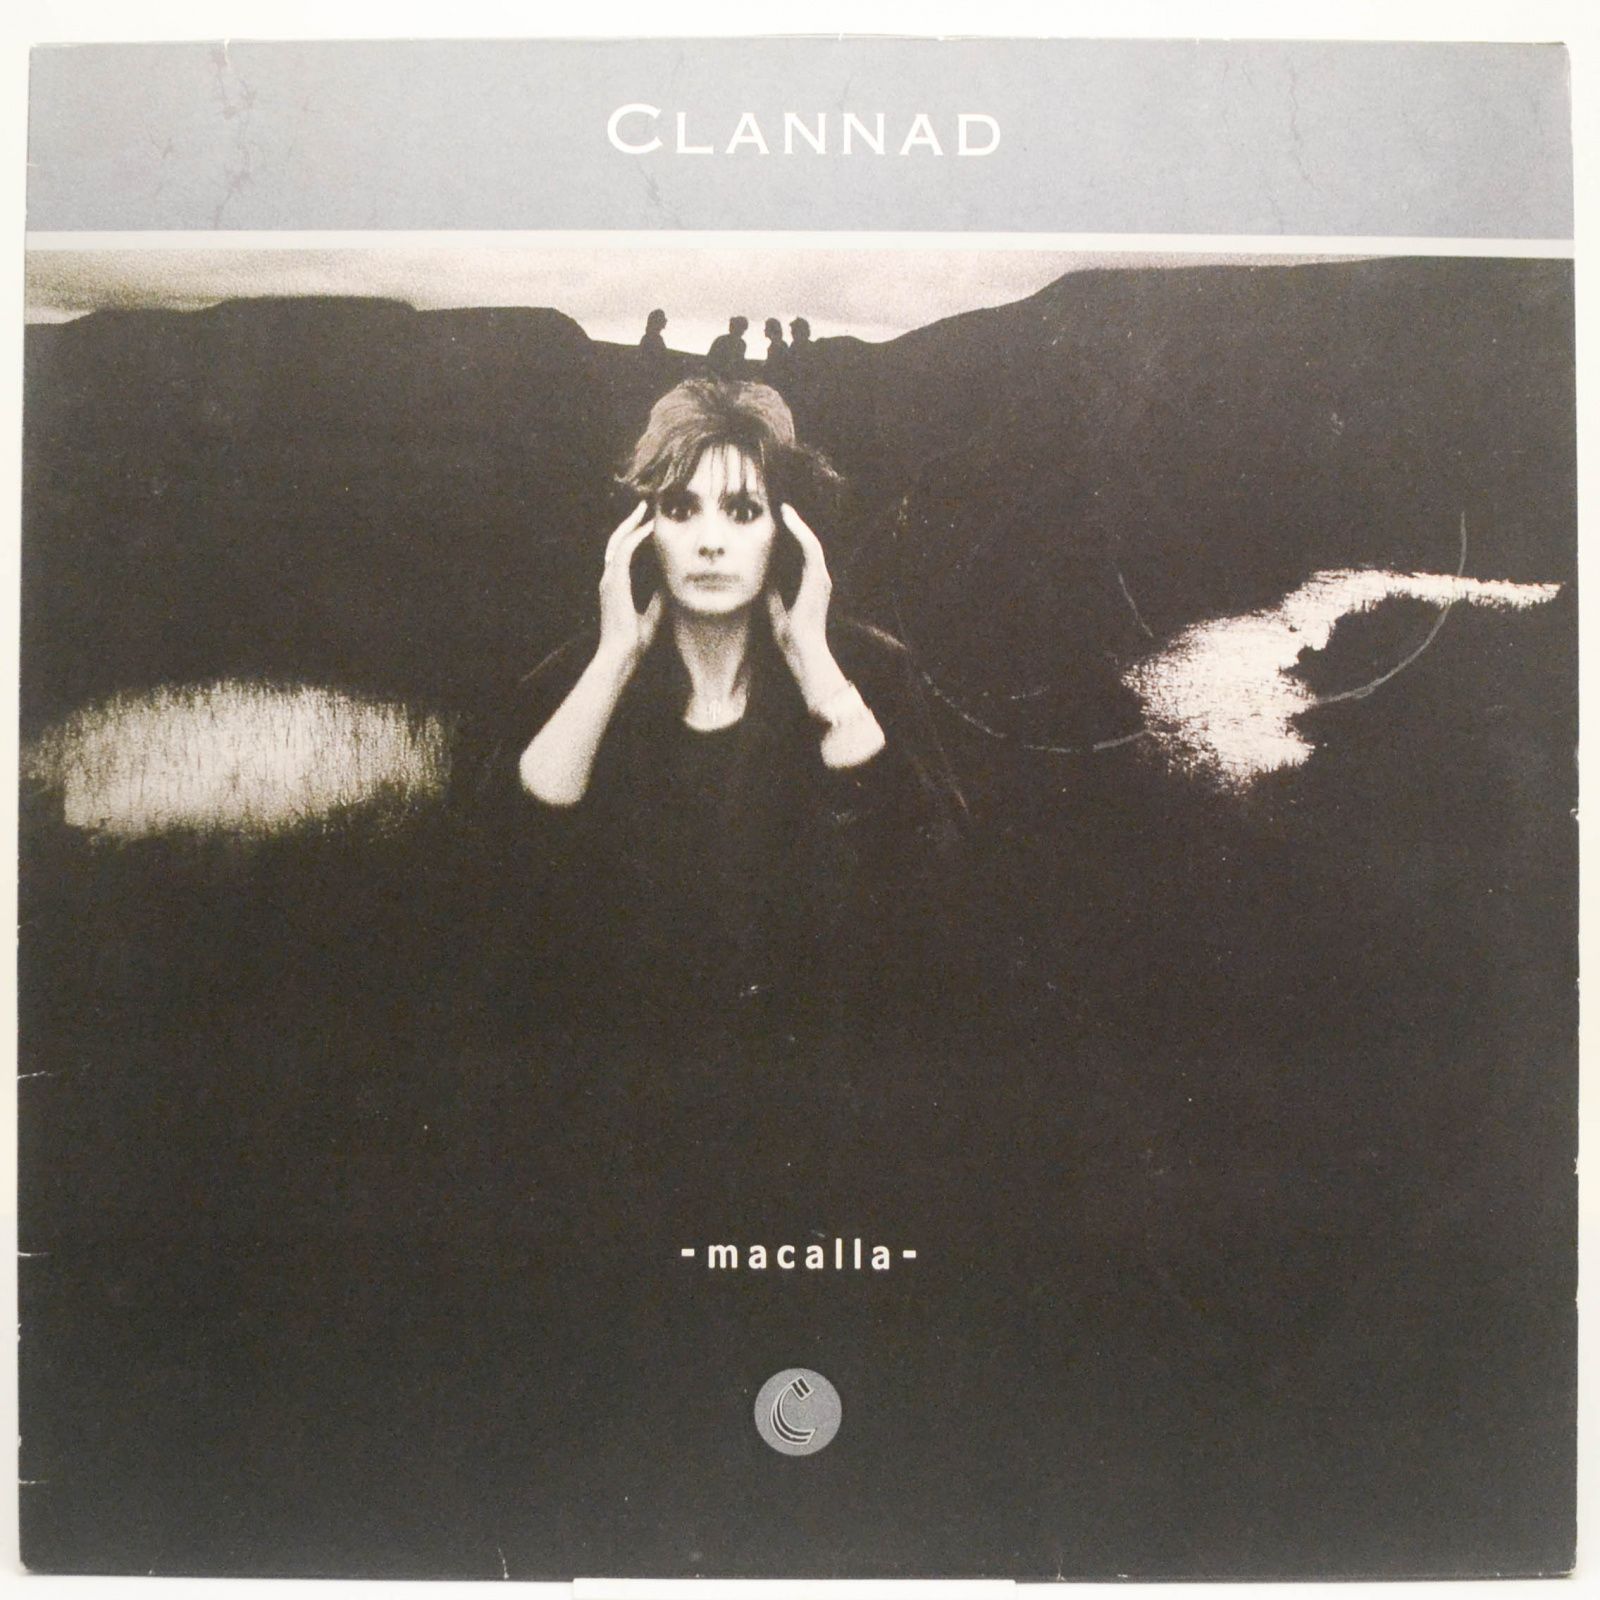 Clannad — Macalla, 1985